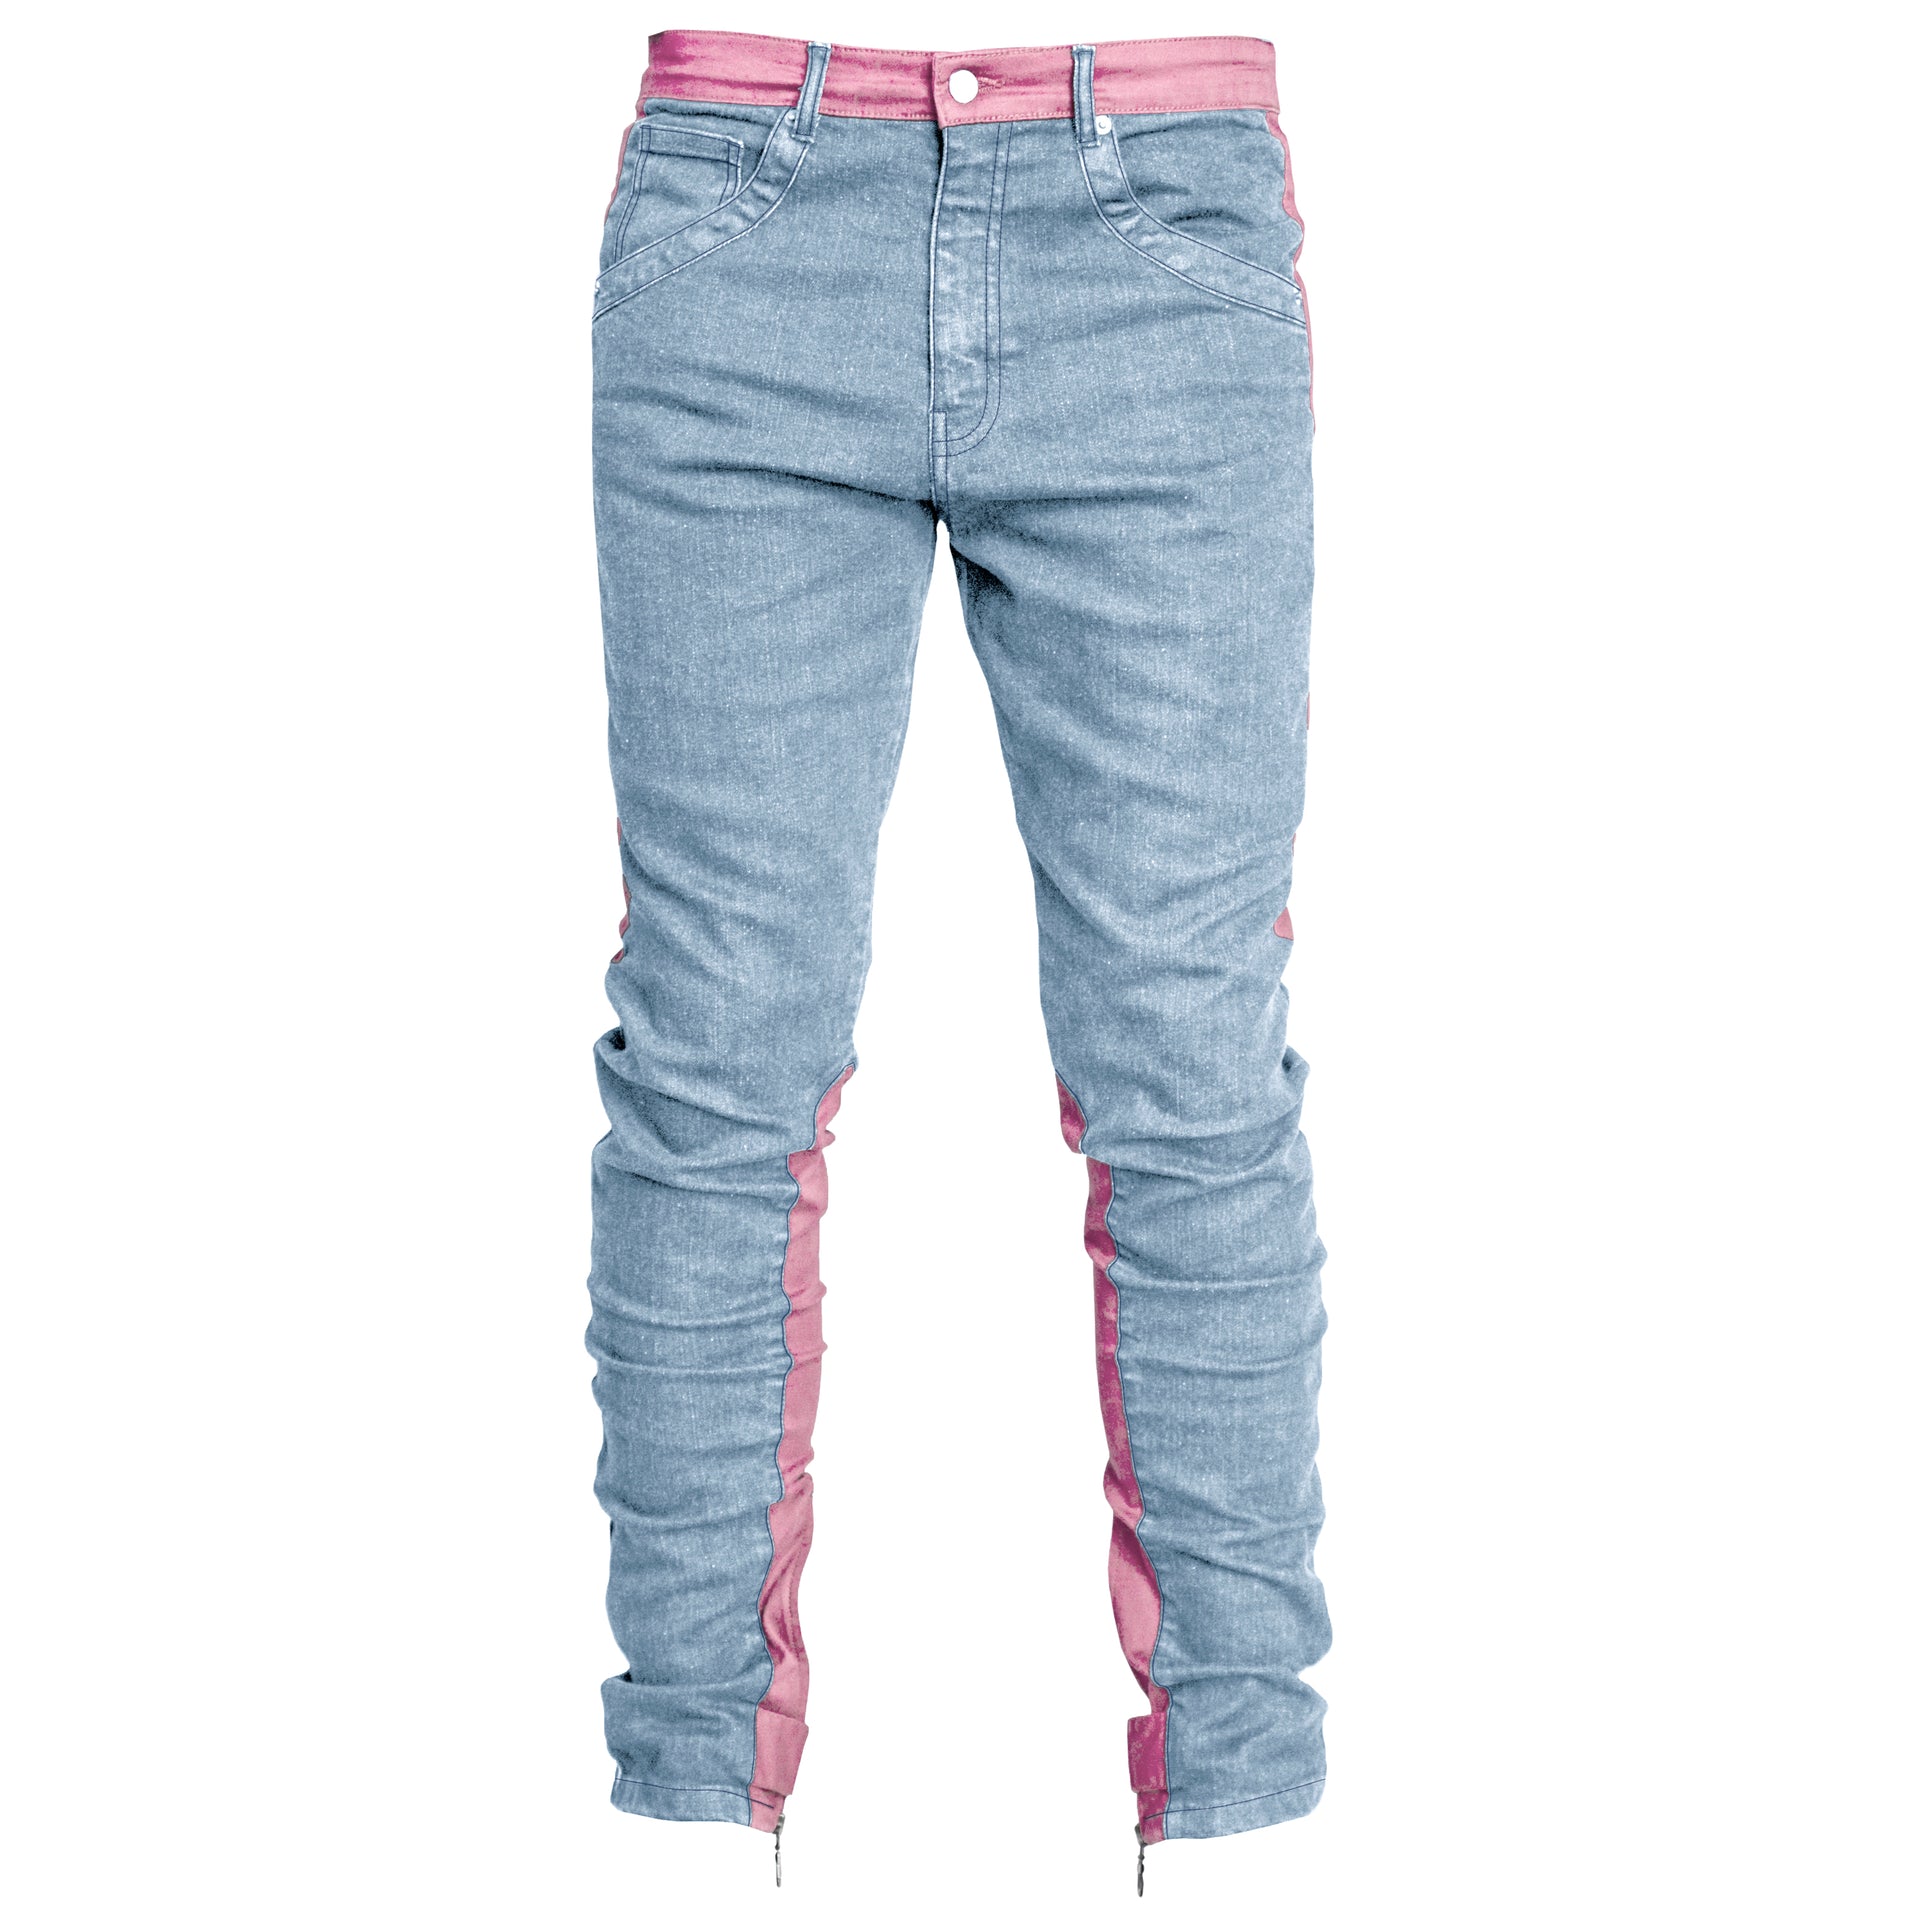 INFORMAL APPAREL  Spear Ankle Zip Jeans : Blue/White